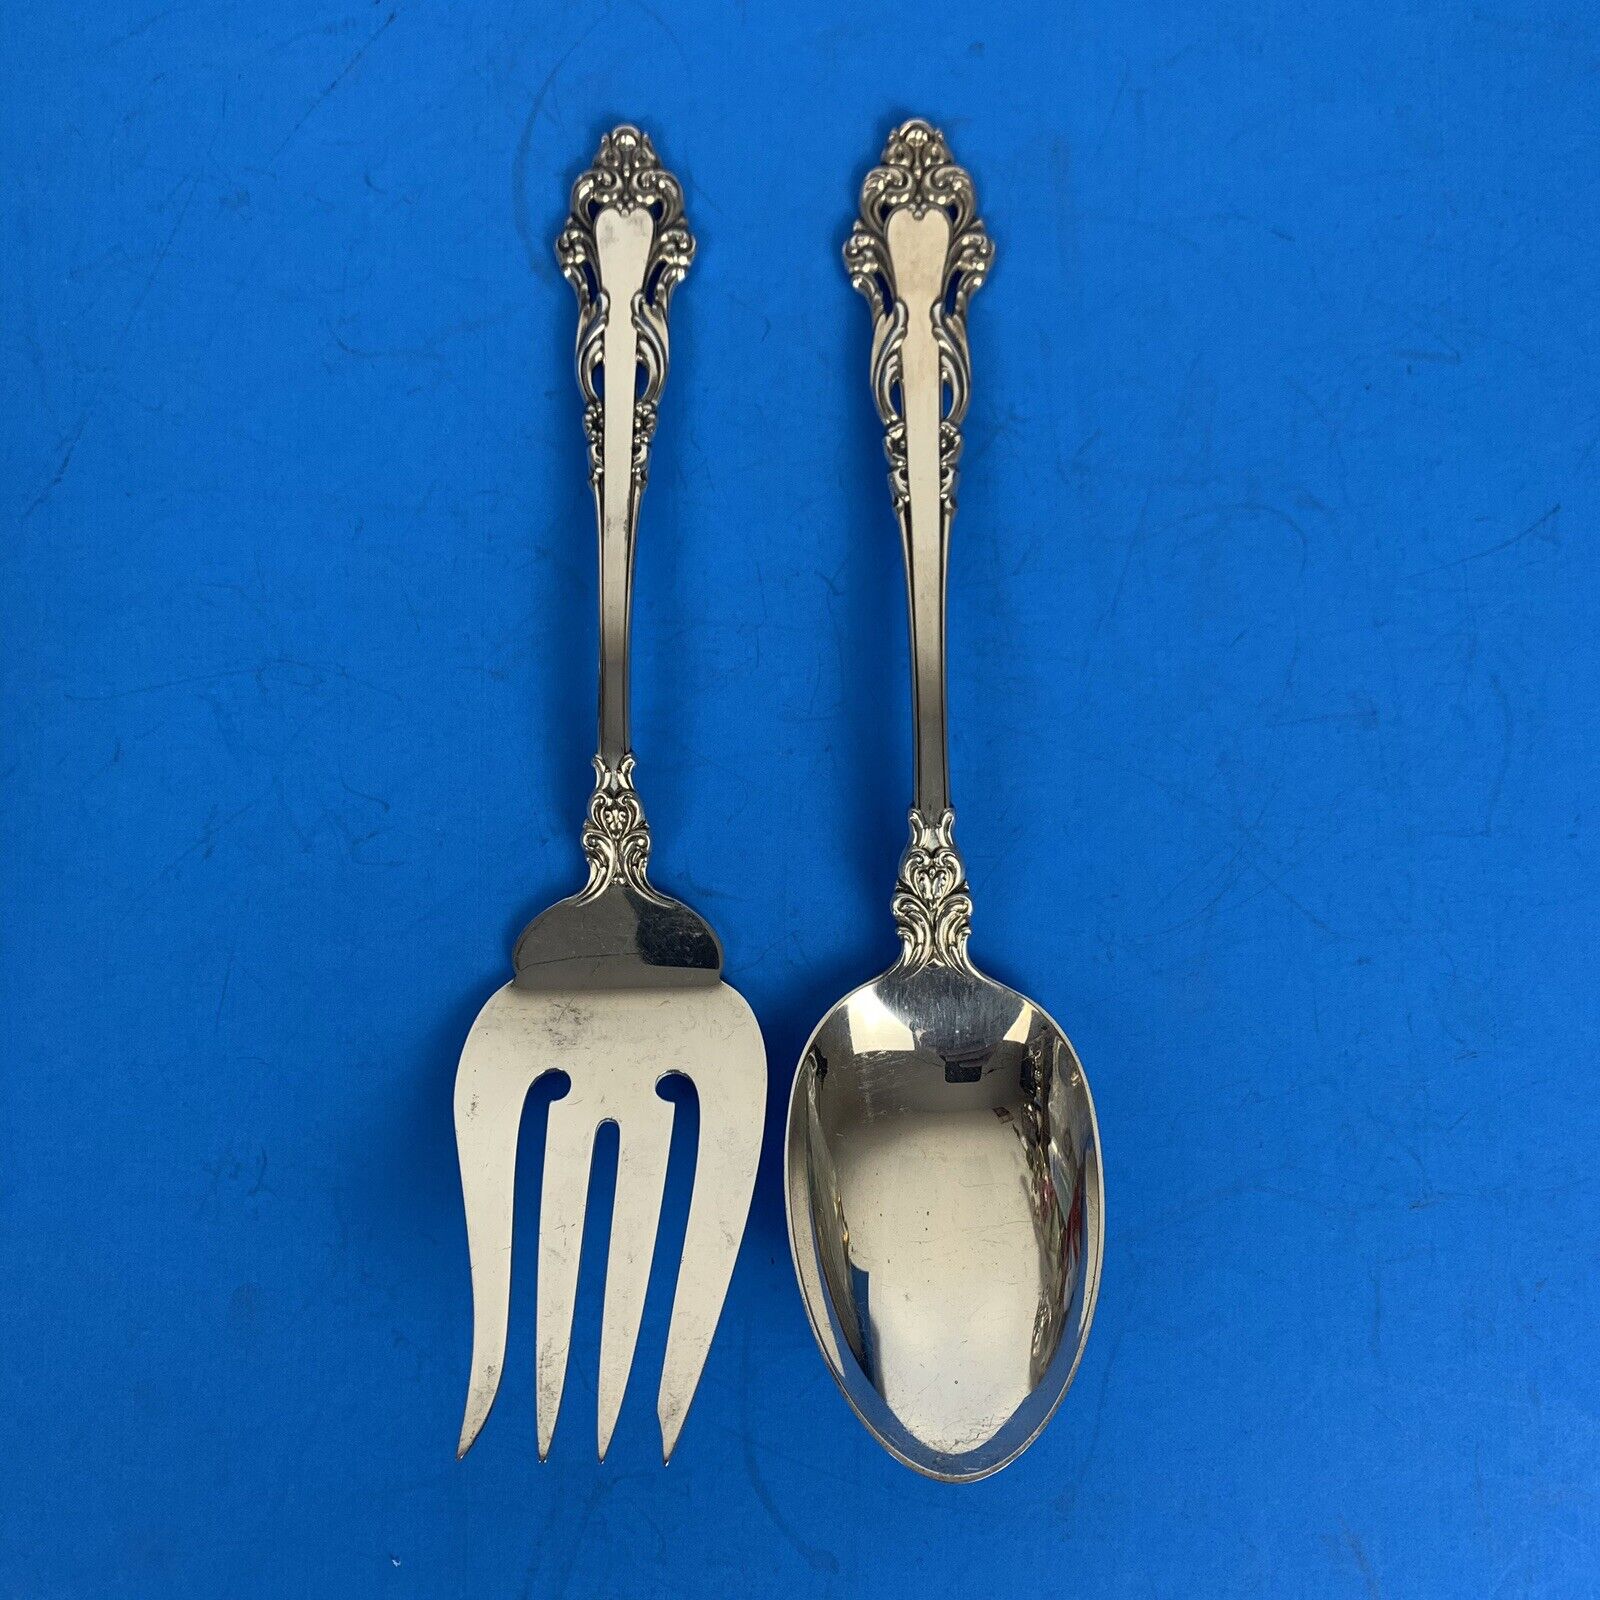 Reed & Barton  Grande Renaissance  8-1/2”  Serving Spoon & Fork  Sterling Silver